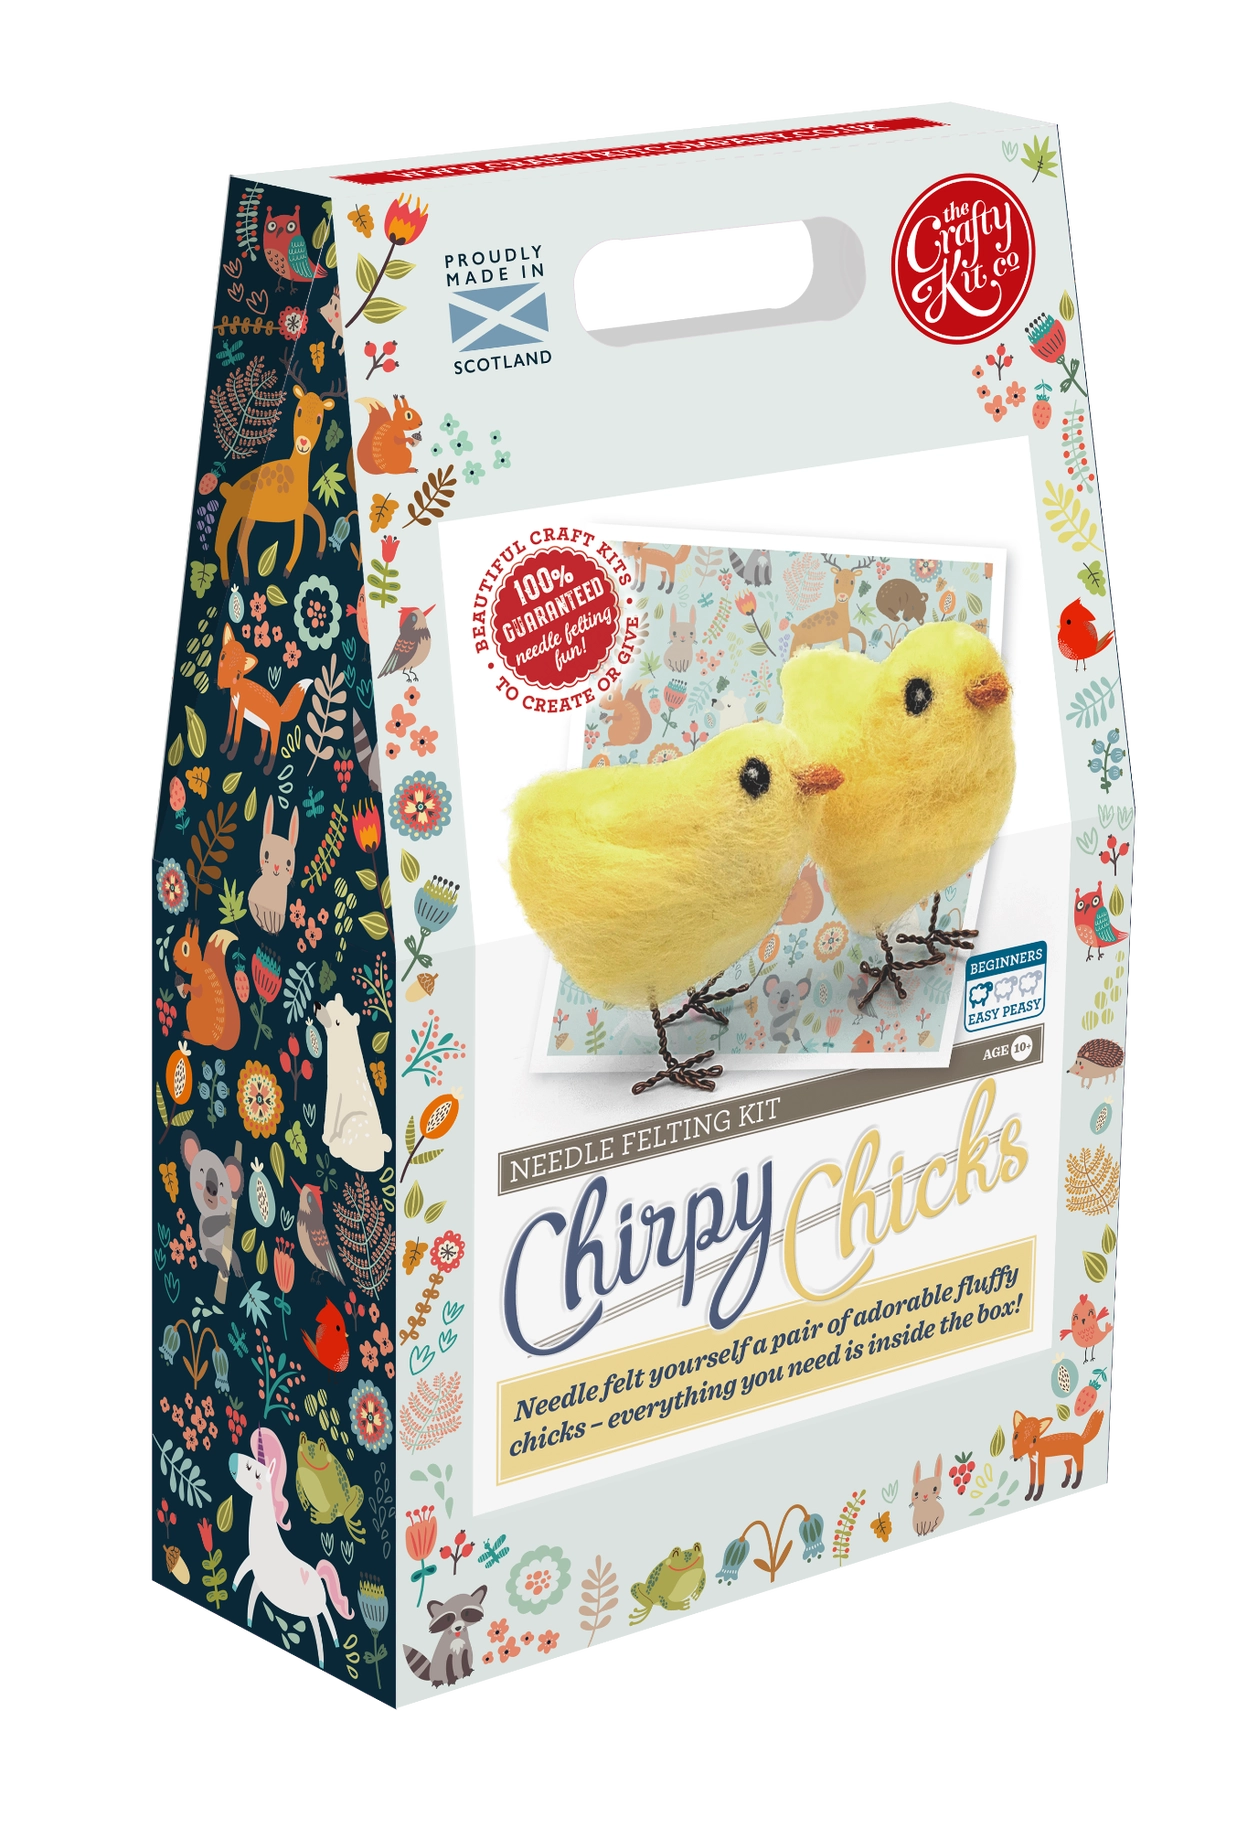 Crafty Kit Company Chirpy Chicks Needle felting kit